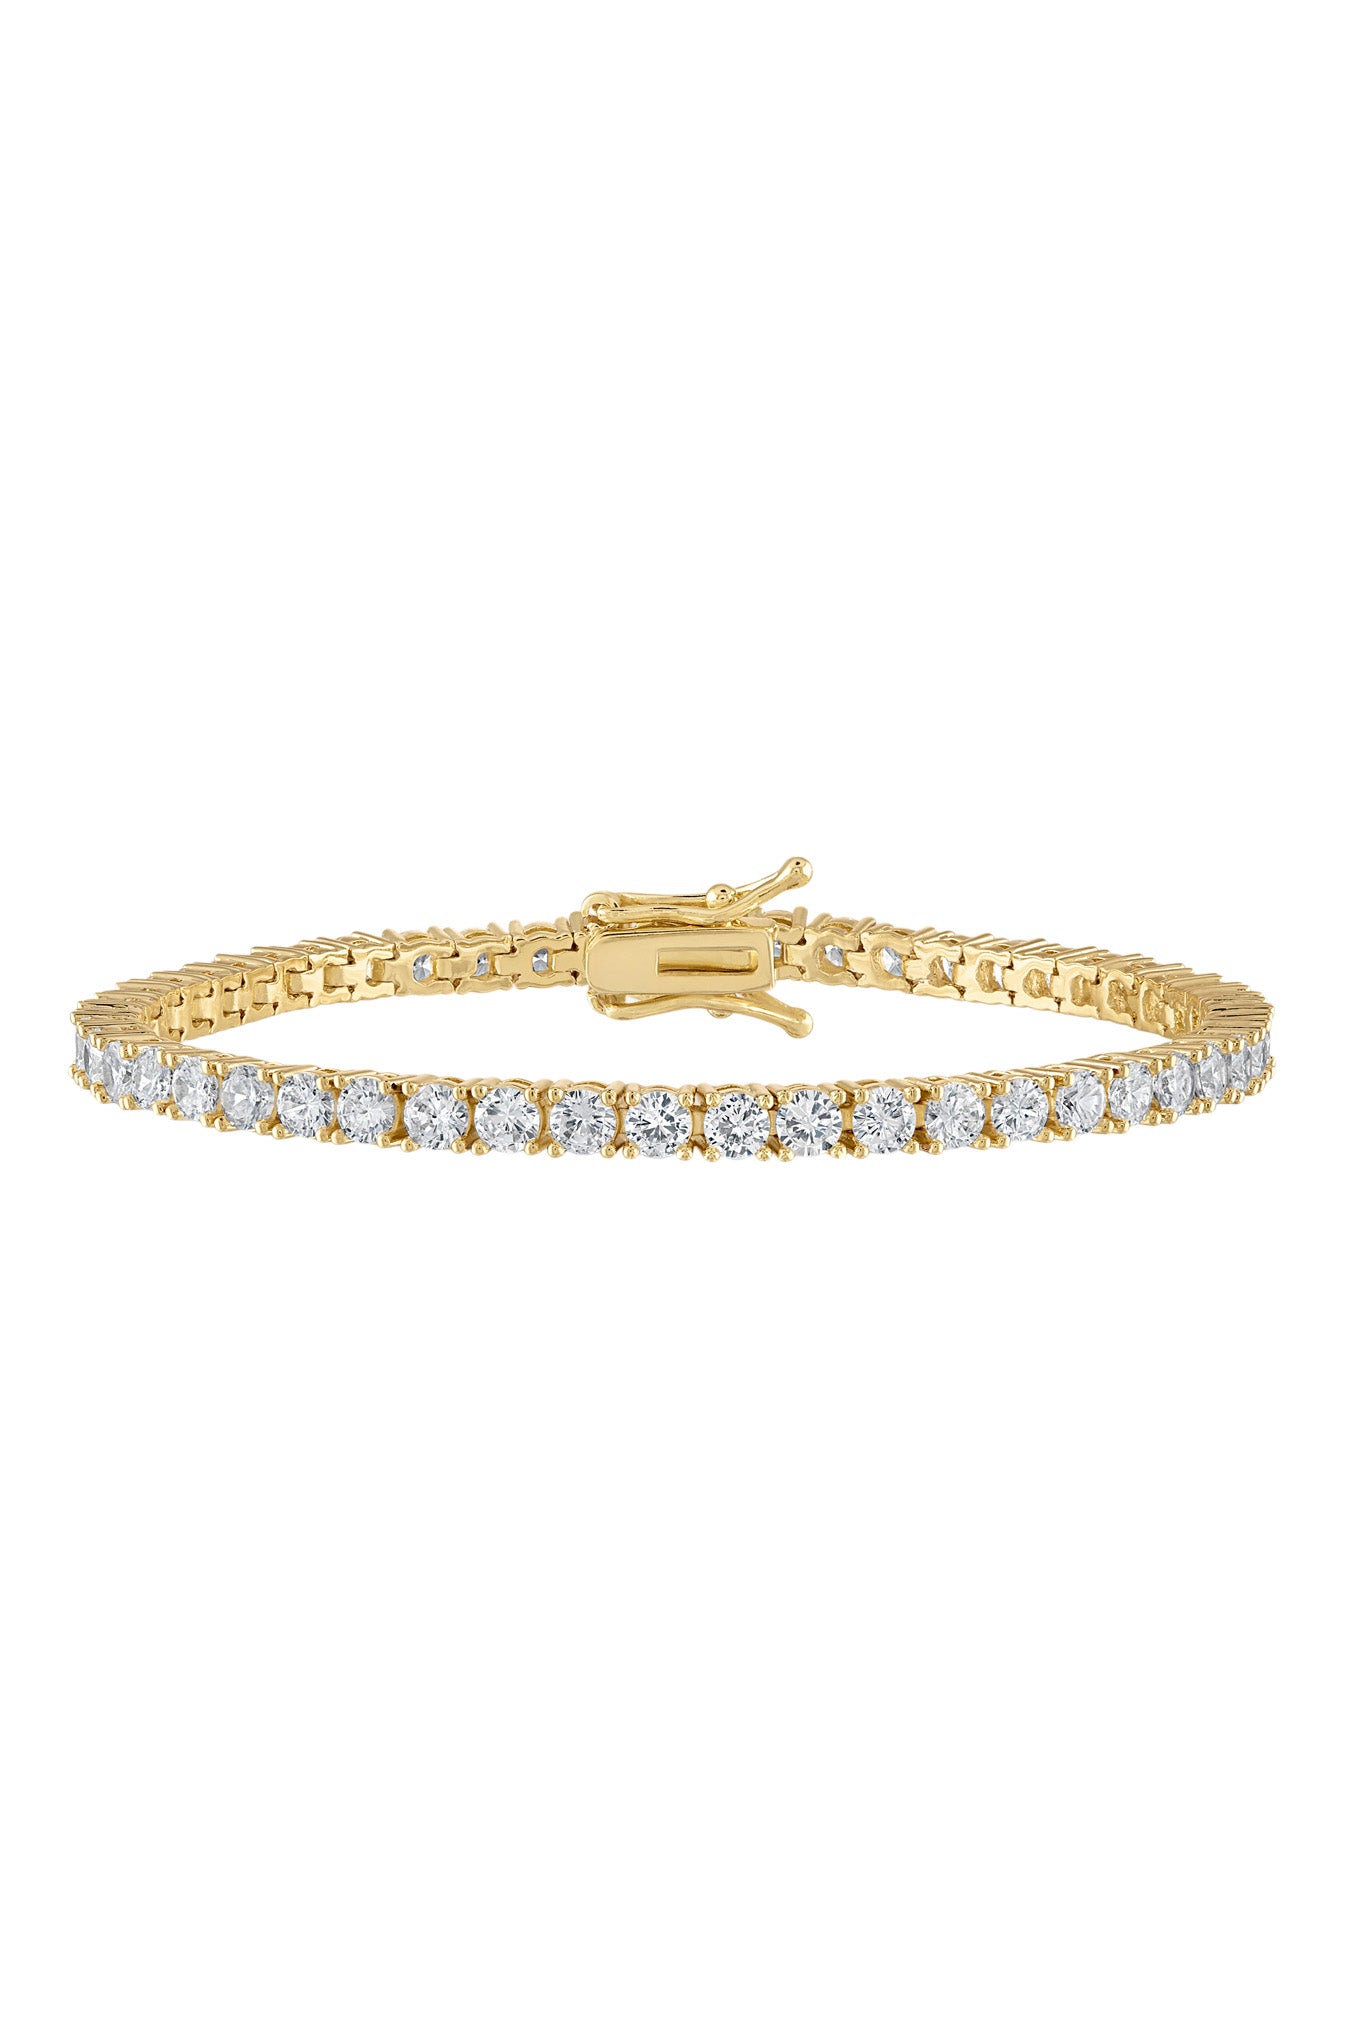 Alexa Leigh Crystal Tennis Bracelet in Yellow Gold